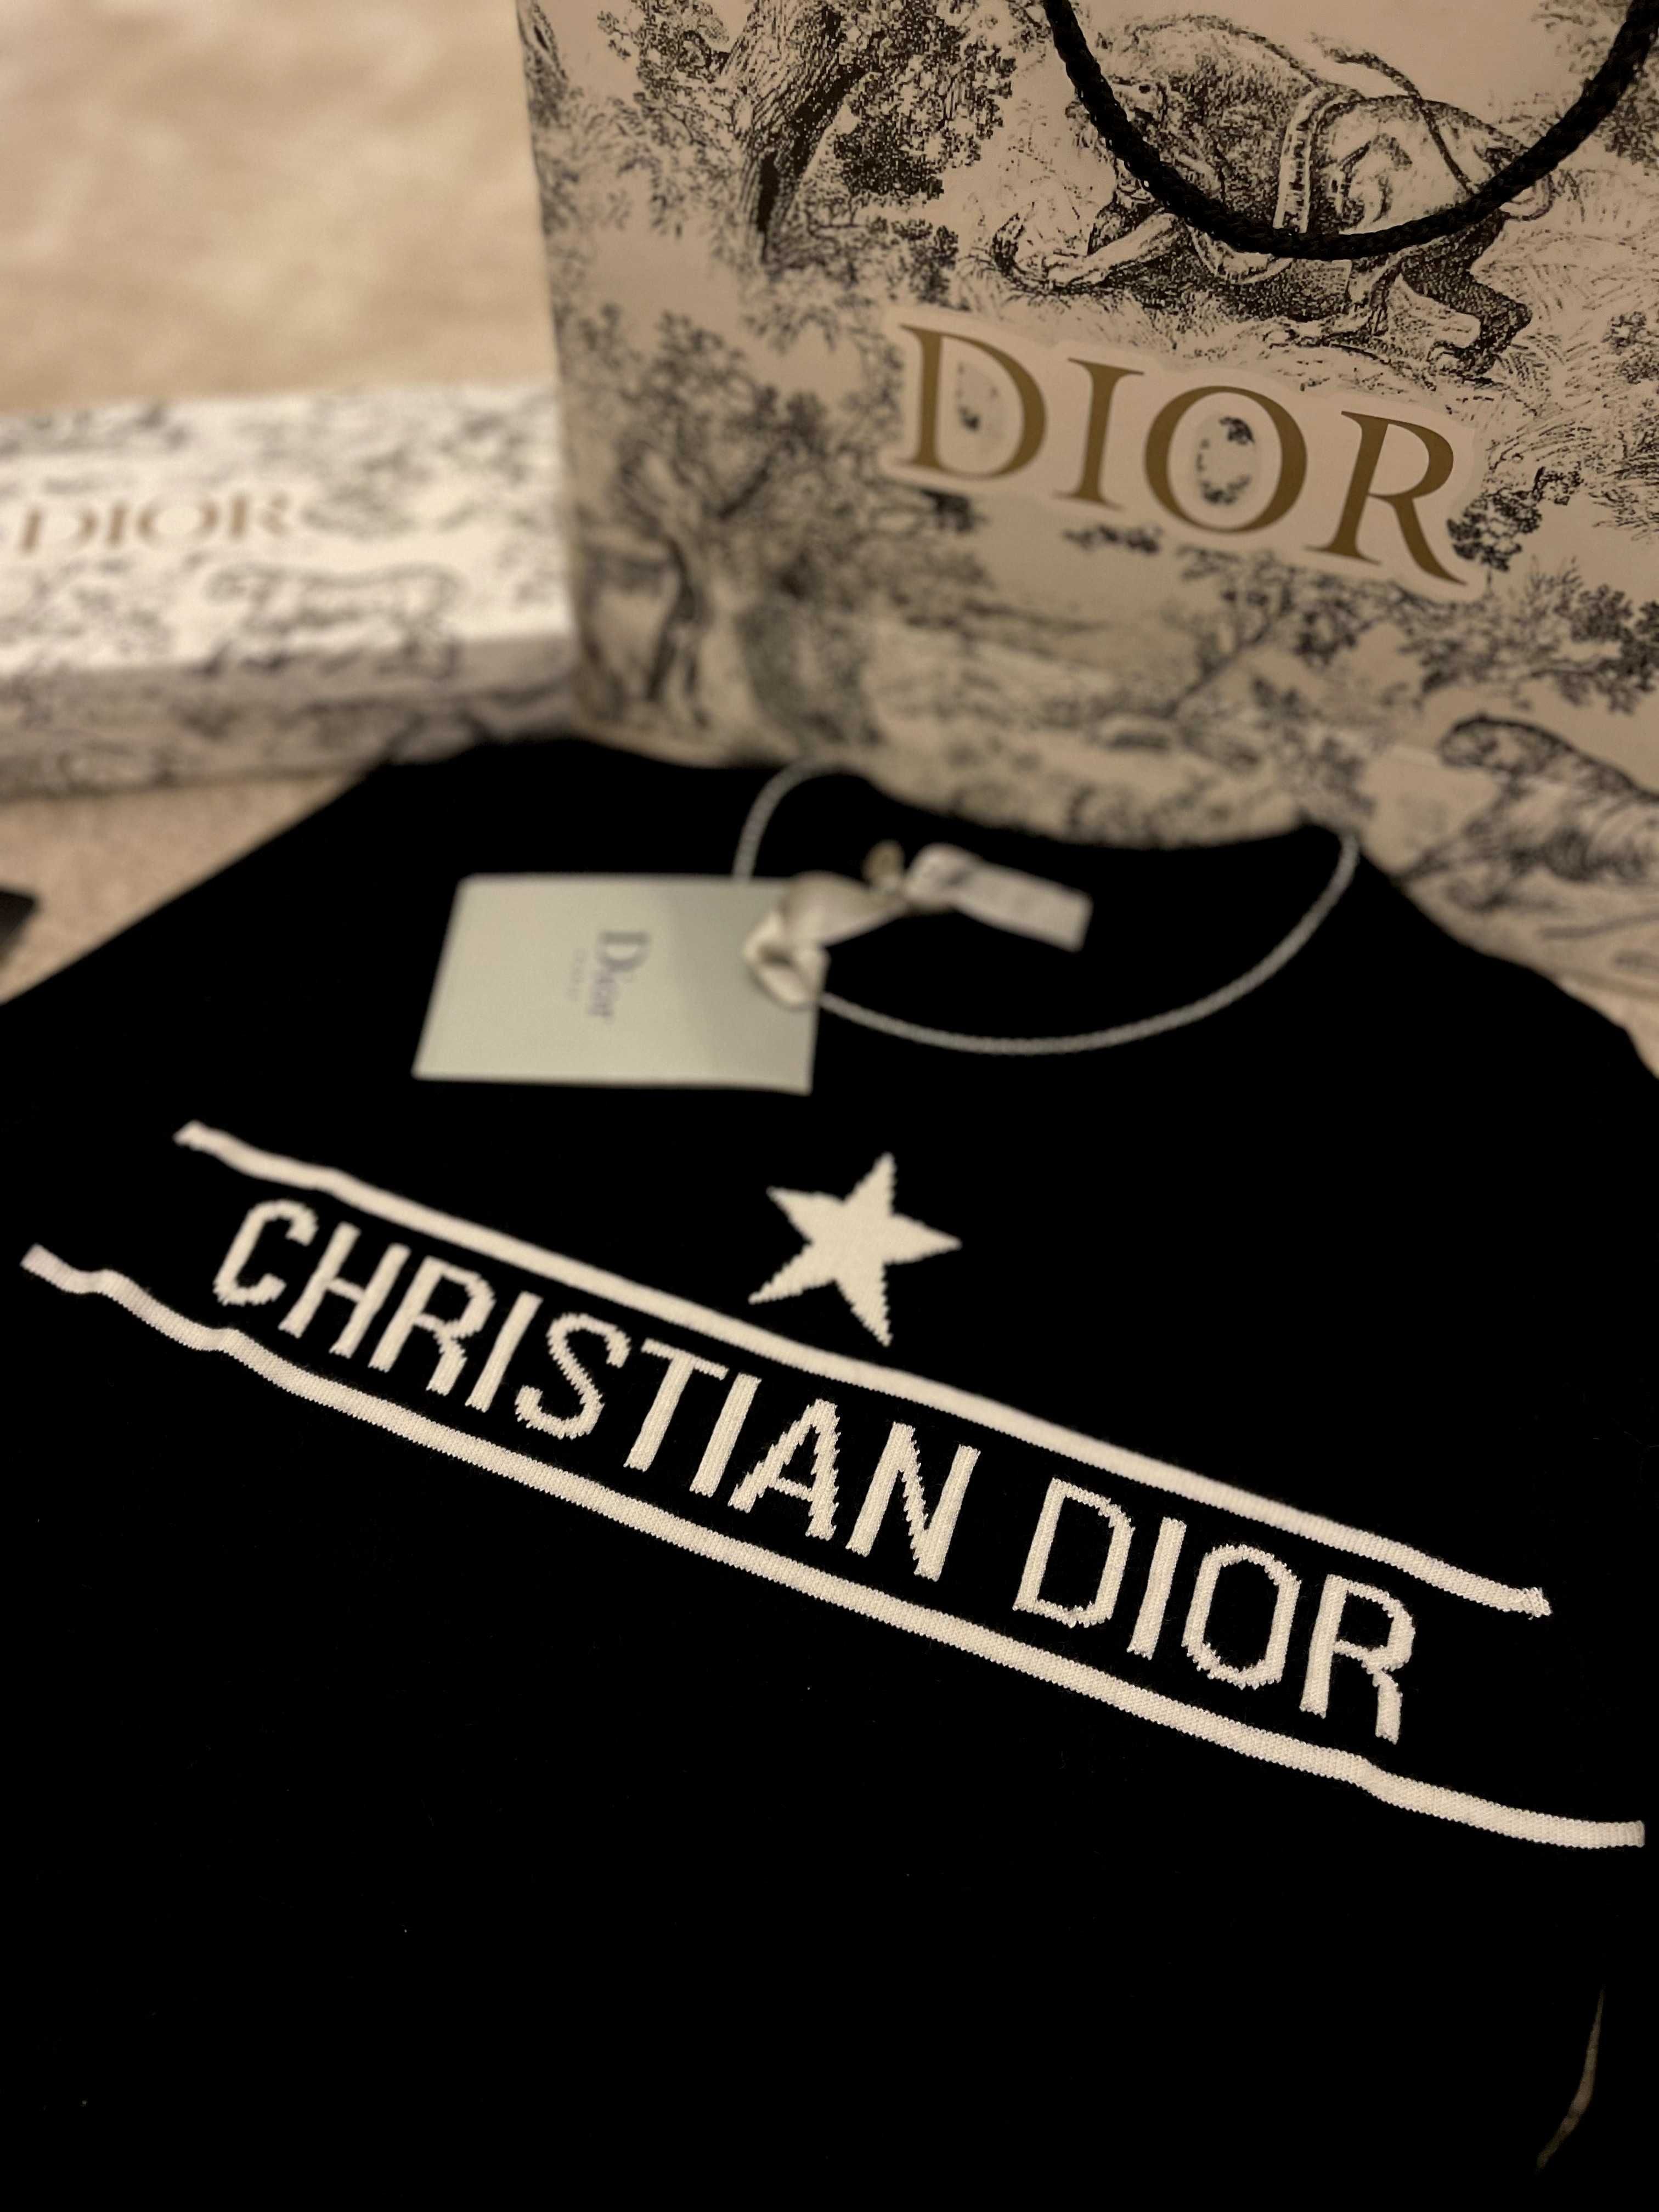 Bluza/Pulover Christian Dior Paris damă